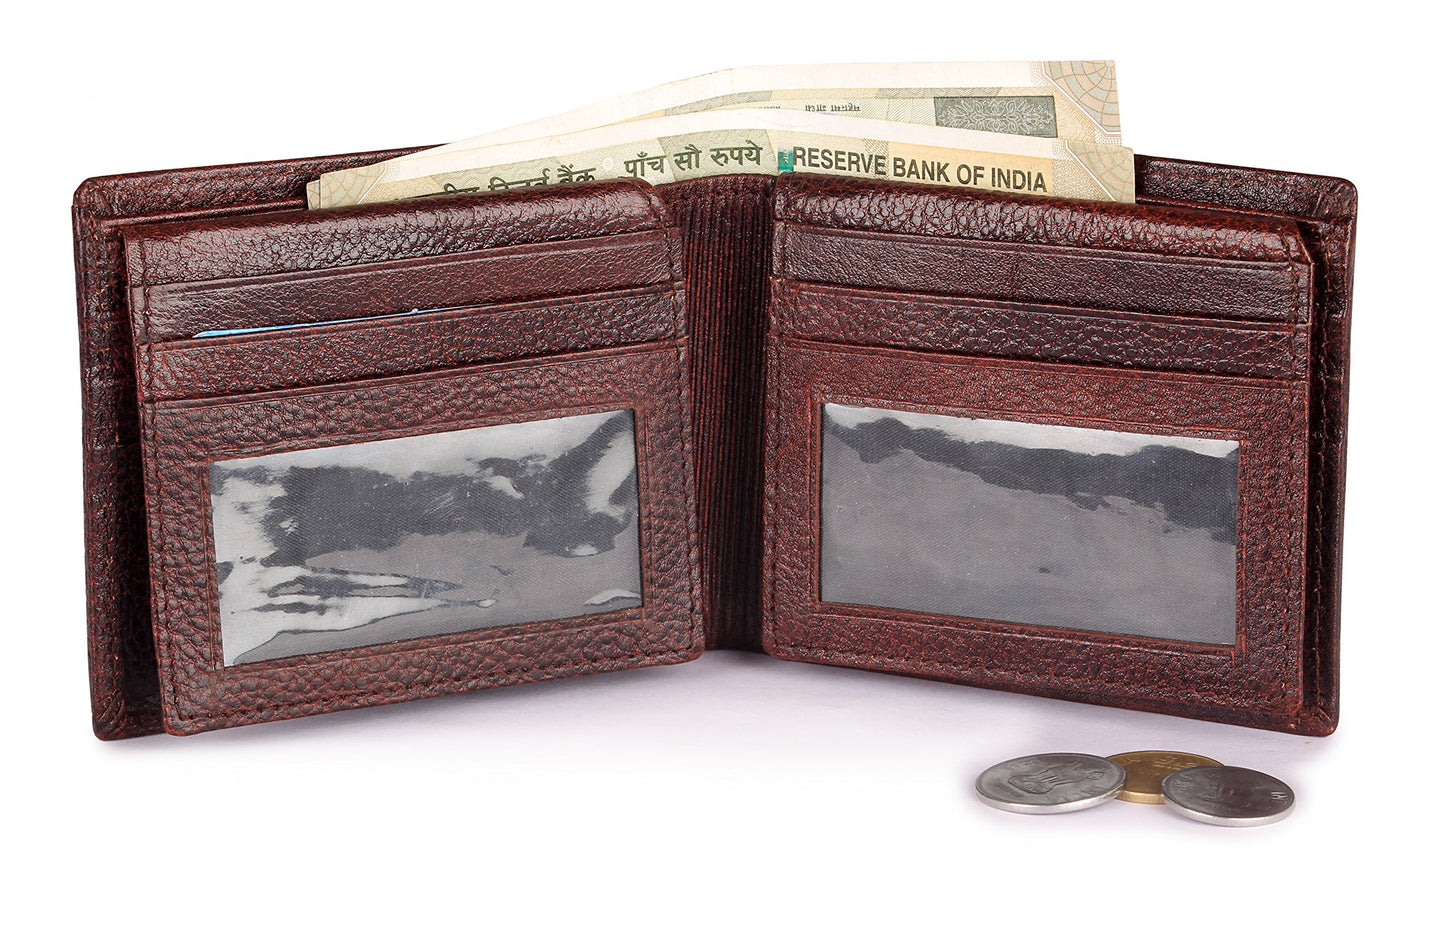 THE CLOWNFISH Chocolate Men's Wallet (TCFWGL-GTCHO3)